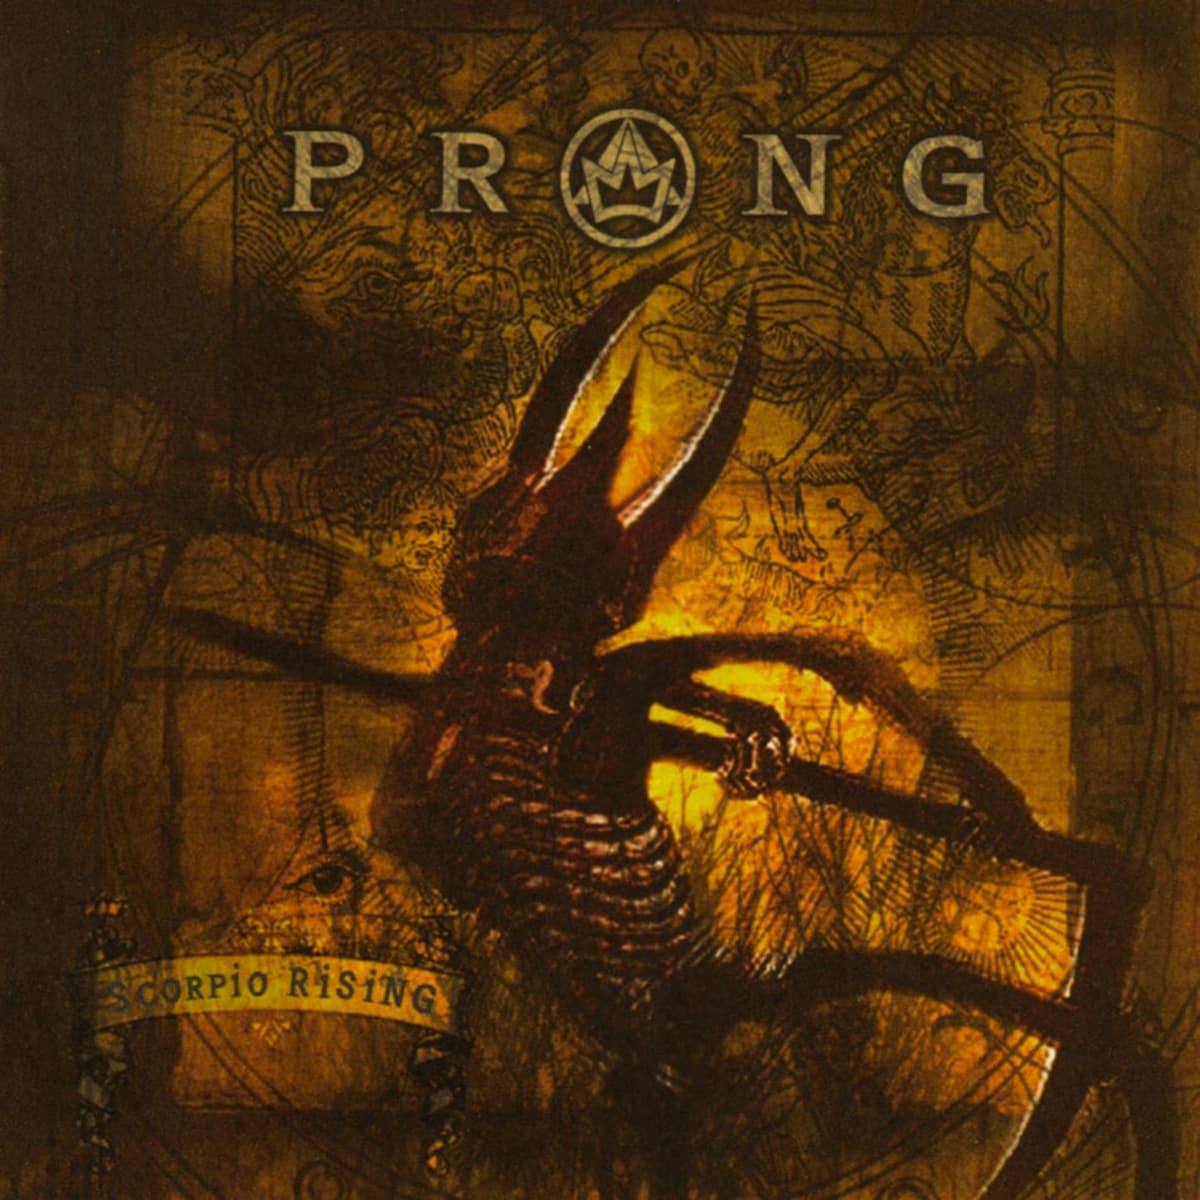 https://images.saymedia-content.com/.image/ar_1:1%2Cc_fill%2Ccs_srgb%2Cfl_progressive%2Cq_auto:eco%2Cw_1200/MjAxMjM0NDY2NTYyMTIzNTQ2/review-of-the-album-scorpio-rising-by-new-york-thrash-metal-band-prong.jpg